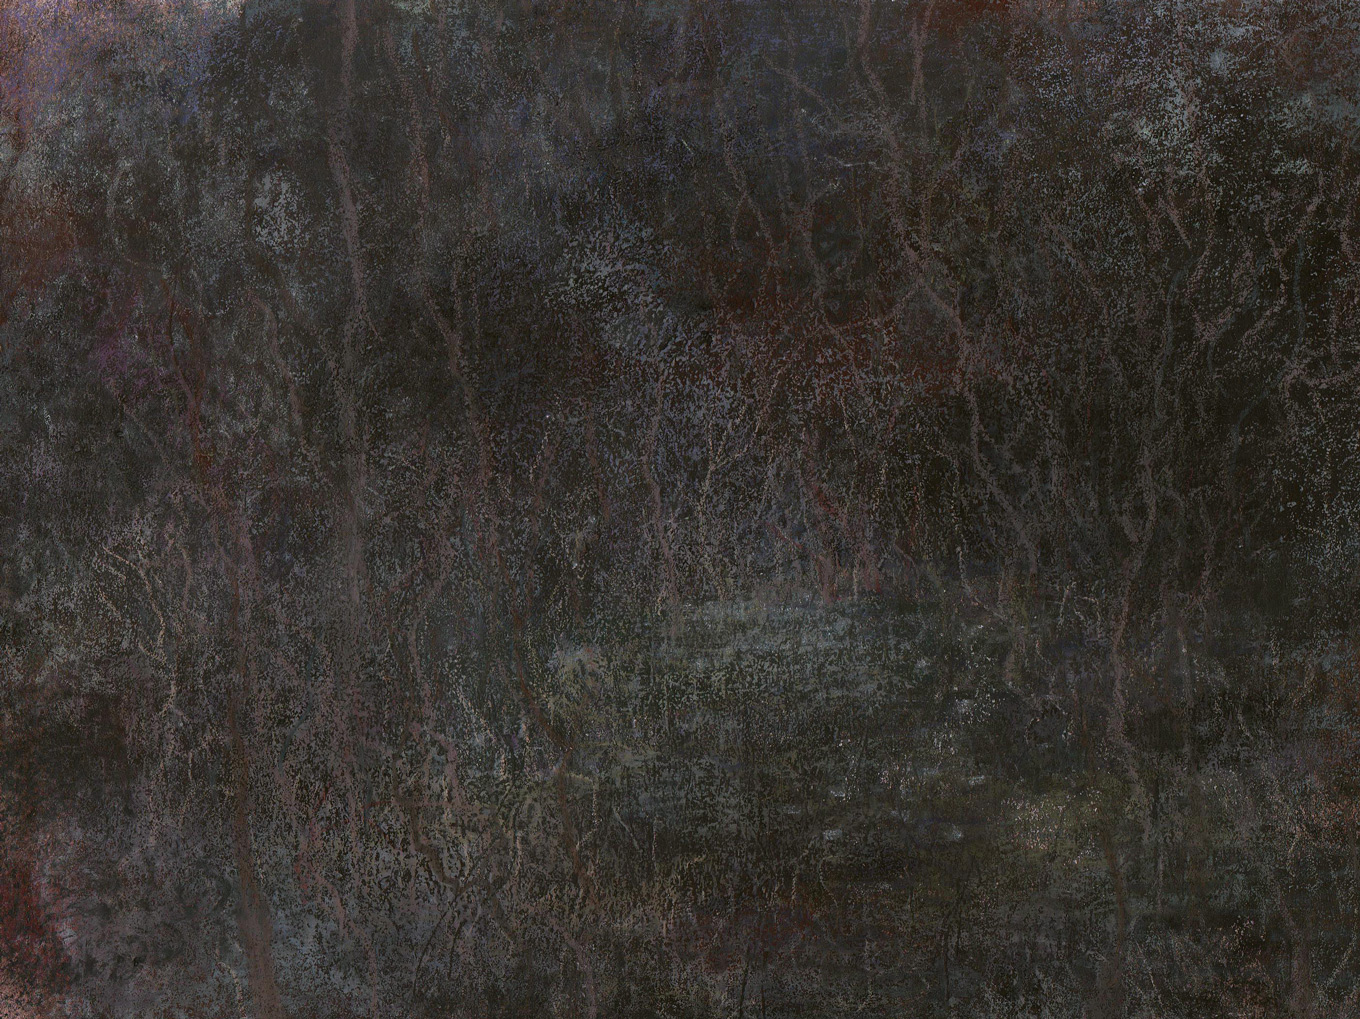 L1273 - Nicholas Herbert, British Artist, mixed media landscape painting of Mermaid's Pond and surrounding Woodland, 2021